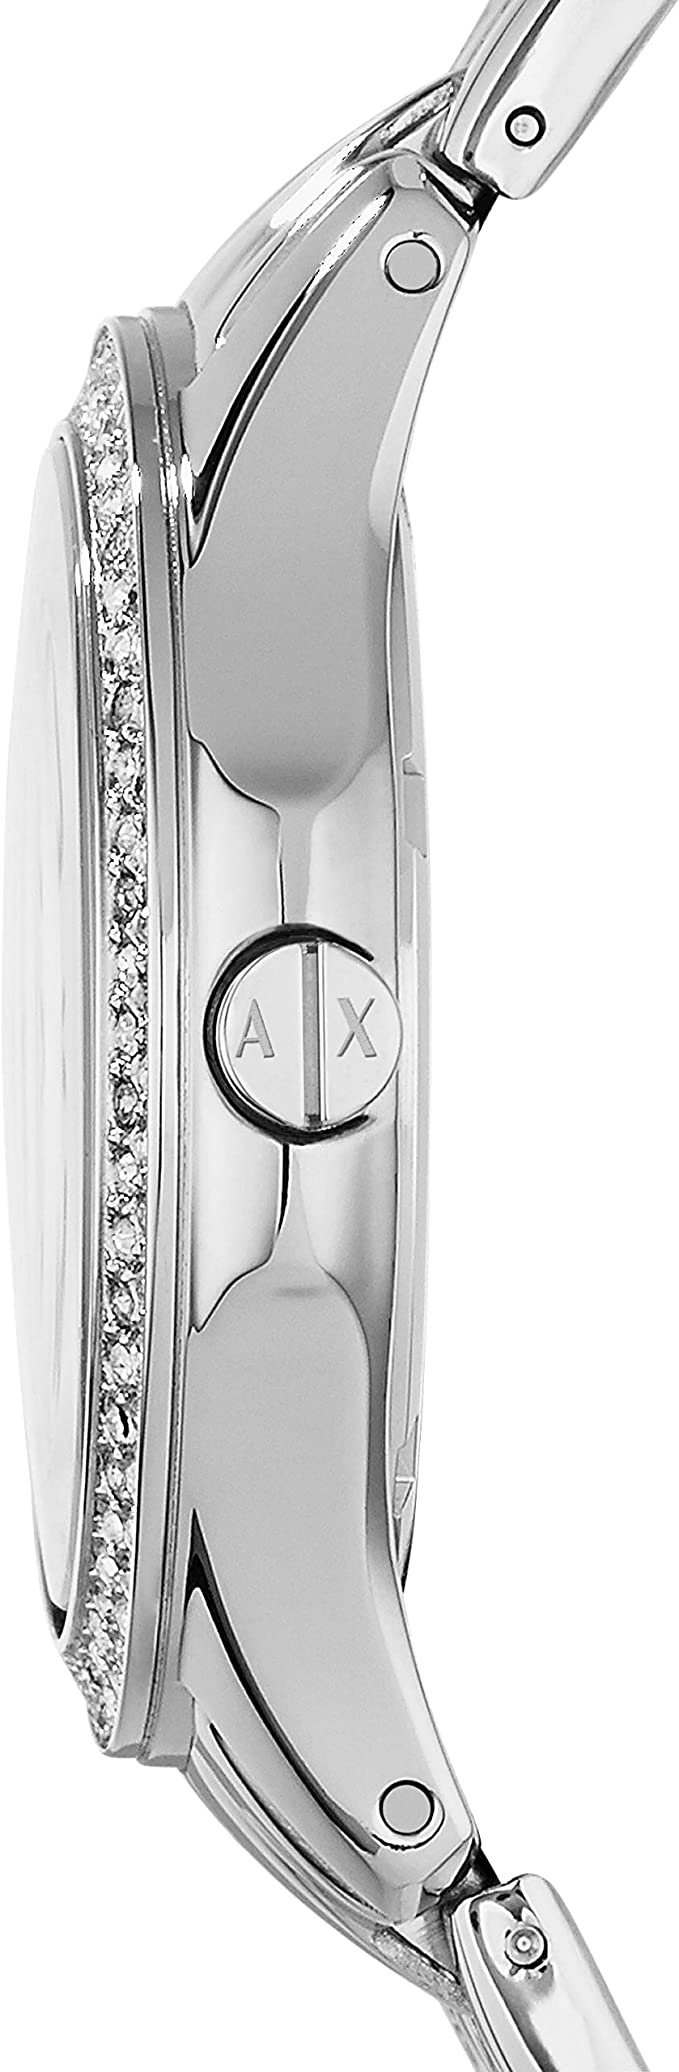 Armani Exchange Ladies Stainless Steel Three Hand Dress Watch AX5215 - 3alababak